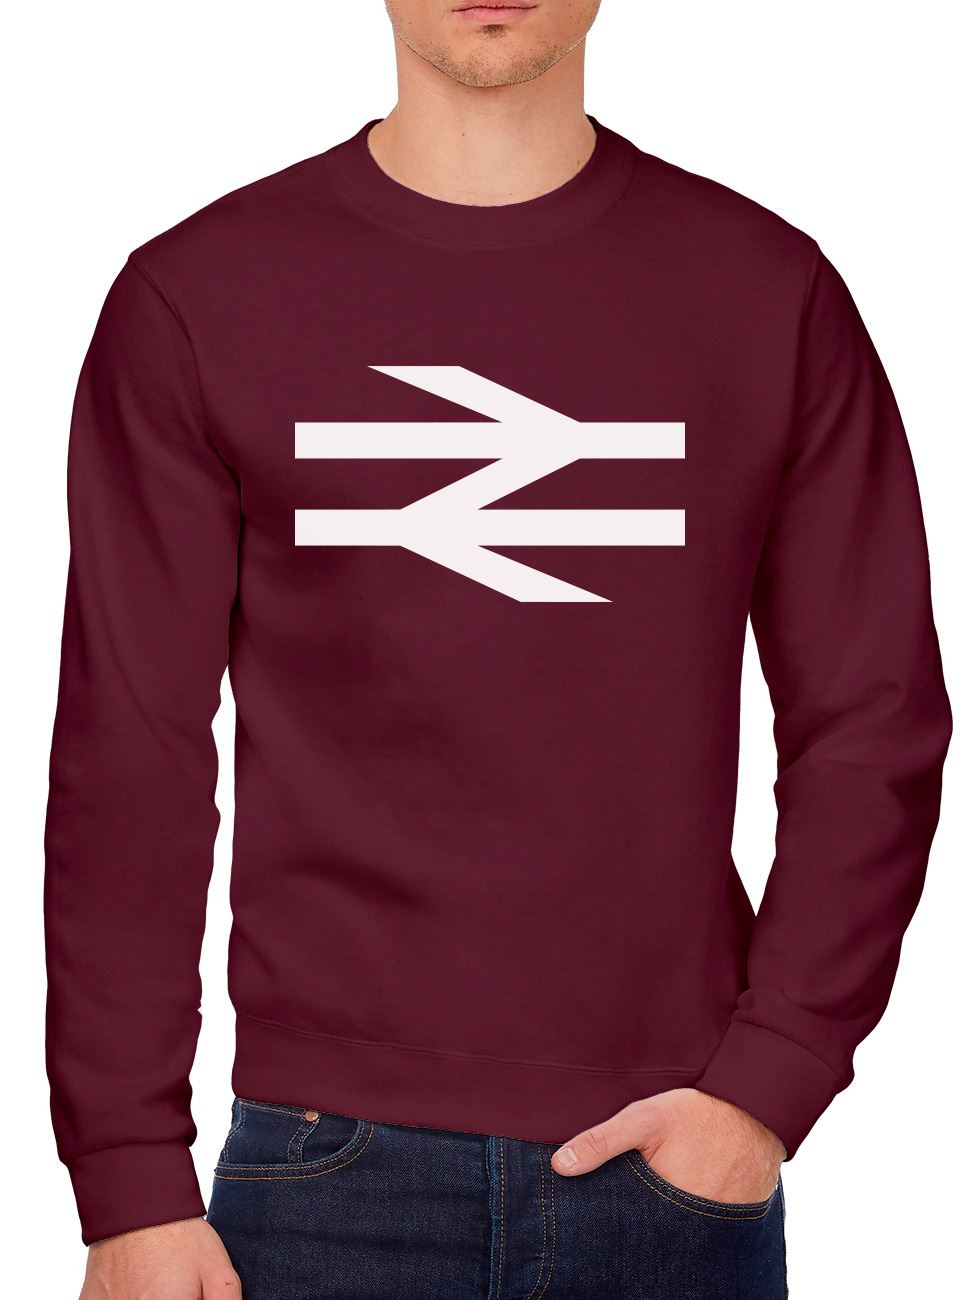 British Rail Train Logo - Youth & Mens Sweatshirt